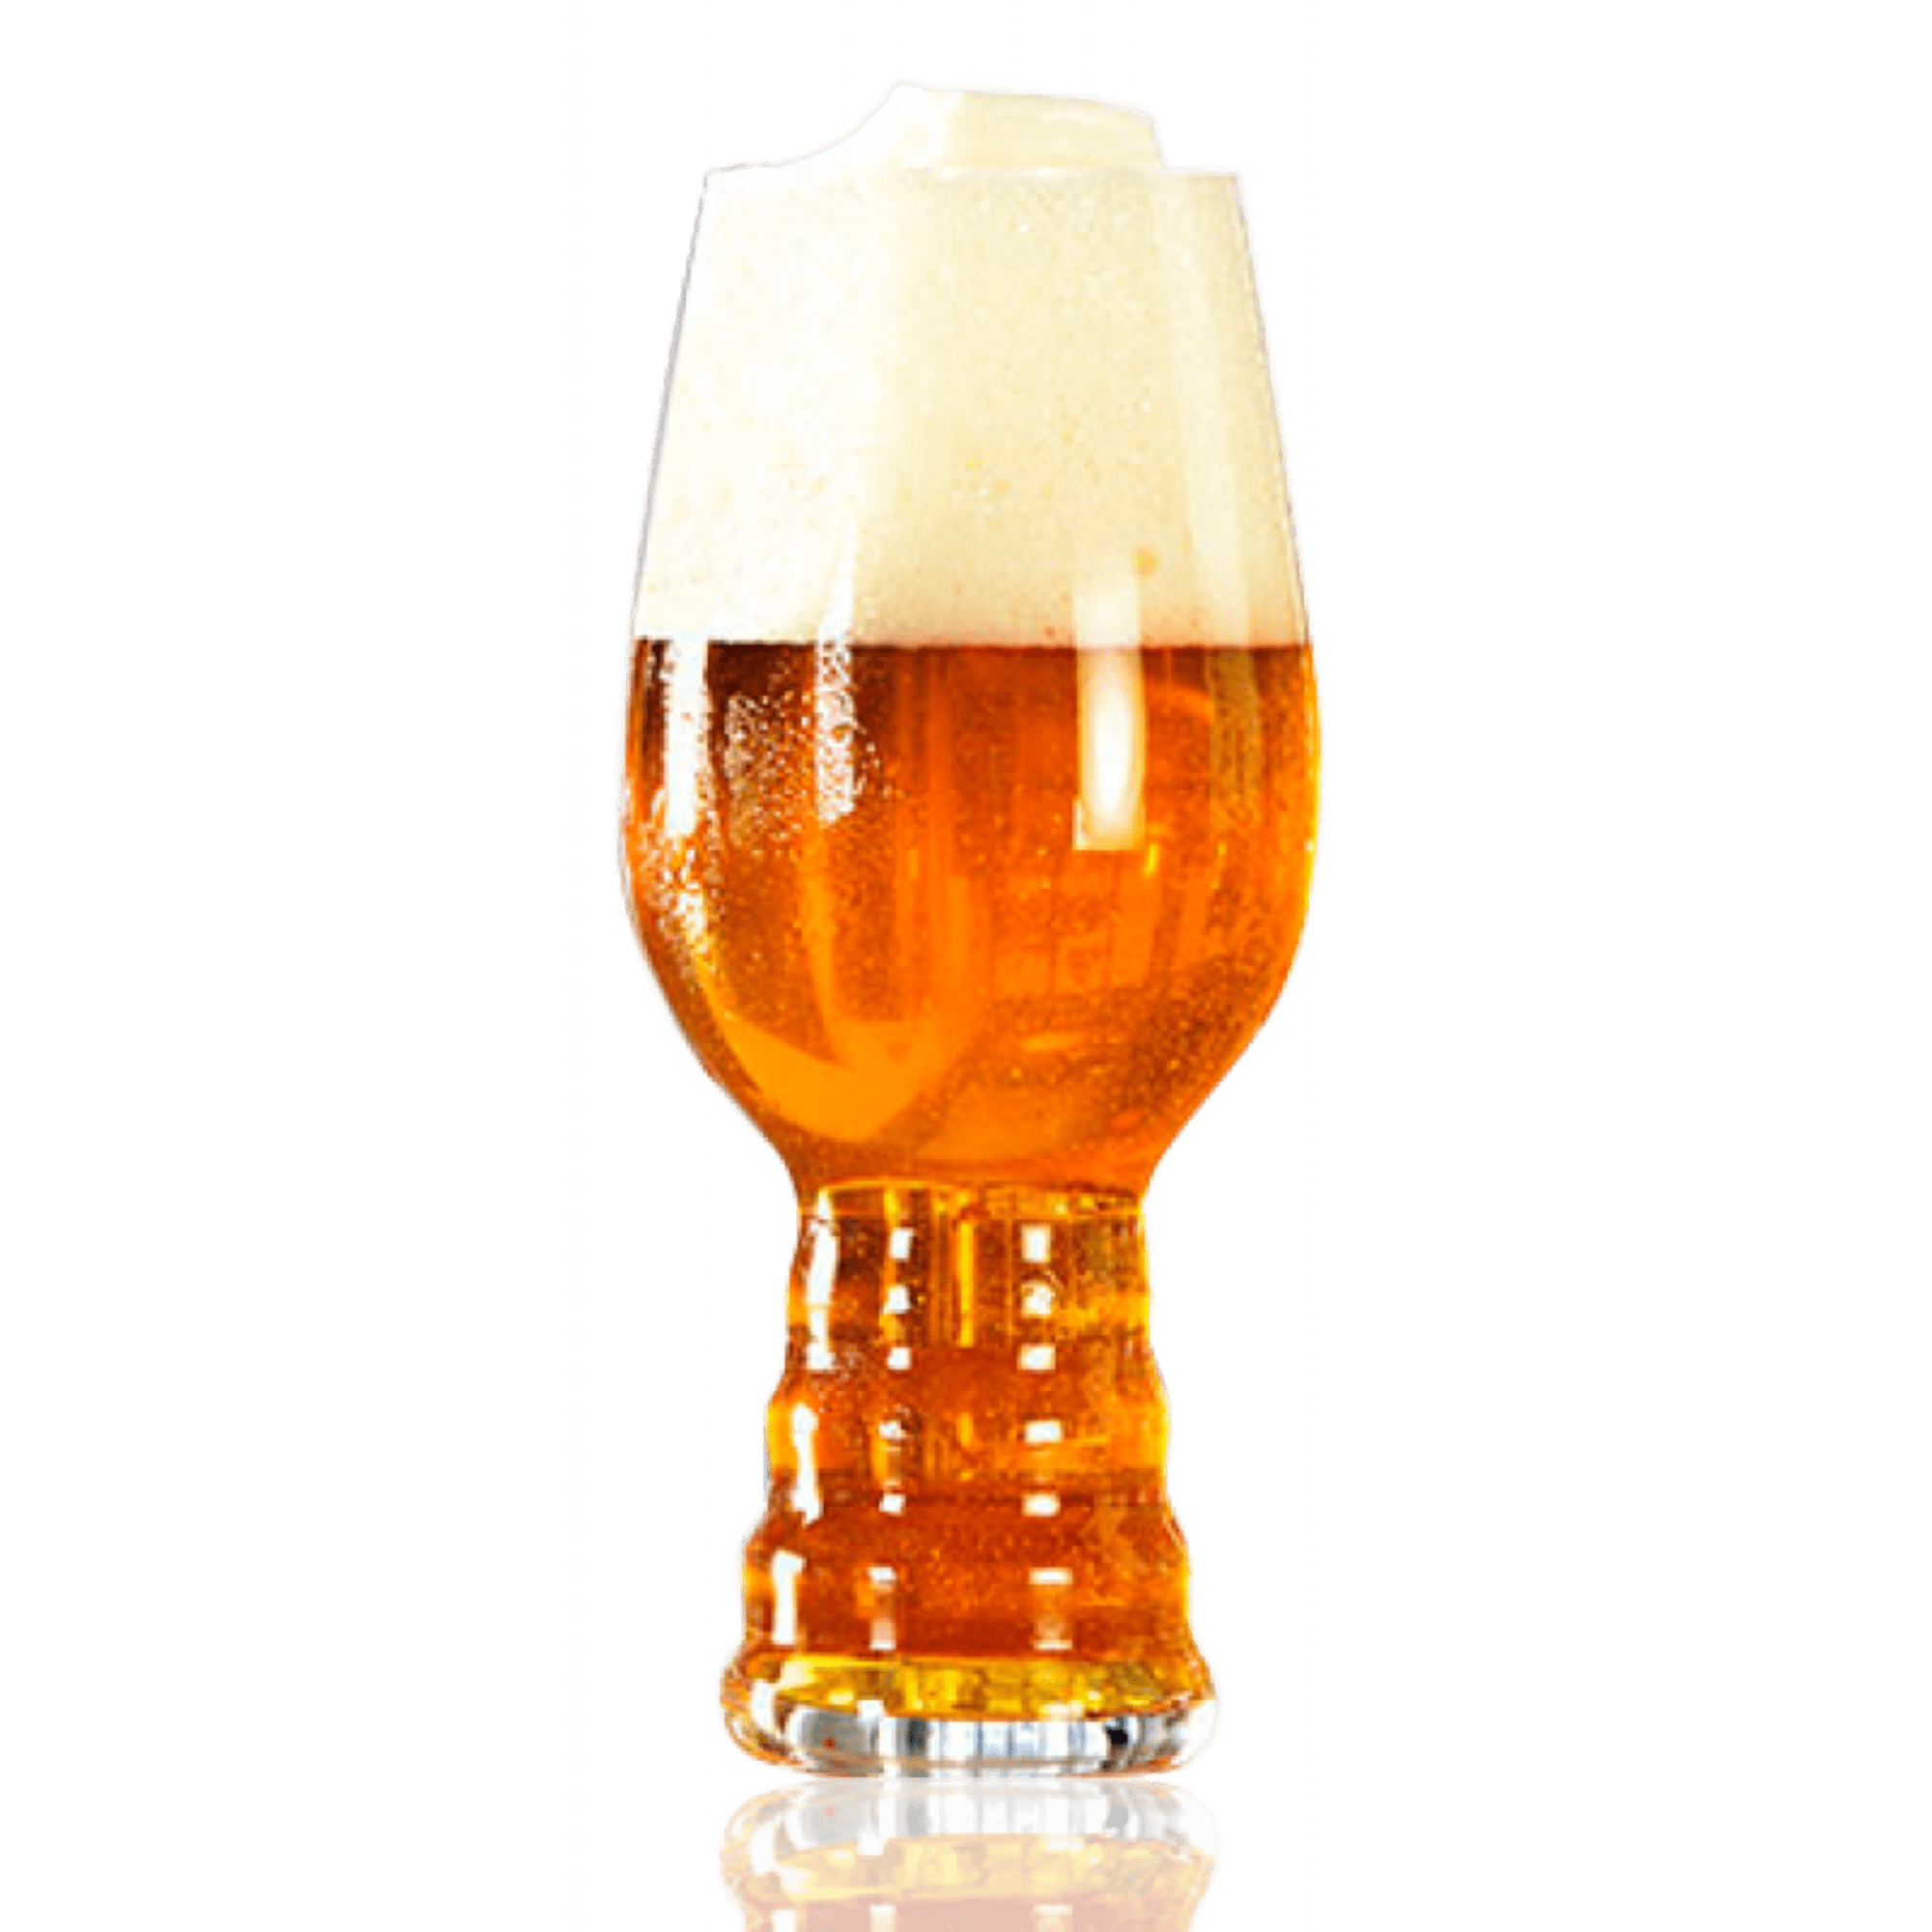 Пэйл Эль бокал. Пиво ИПА В бокале. Spiegelau Beer Classics IPA Glass. Шпигелау бир ИПА. Пивное стекло